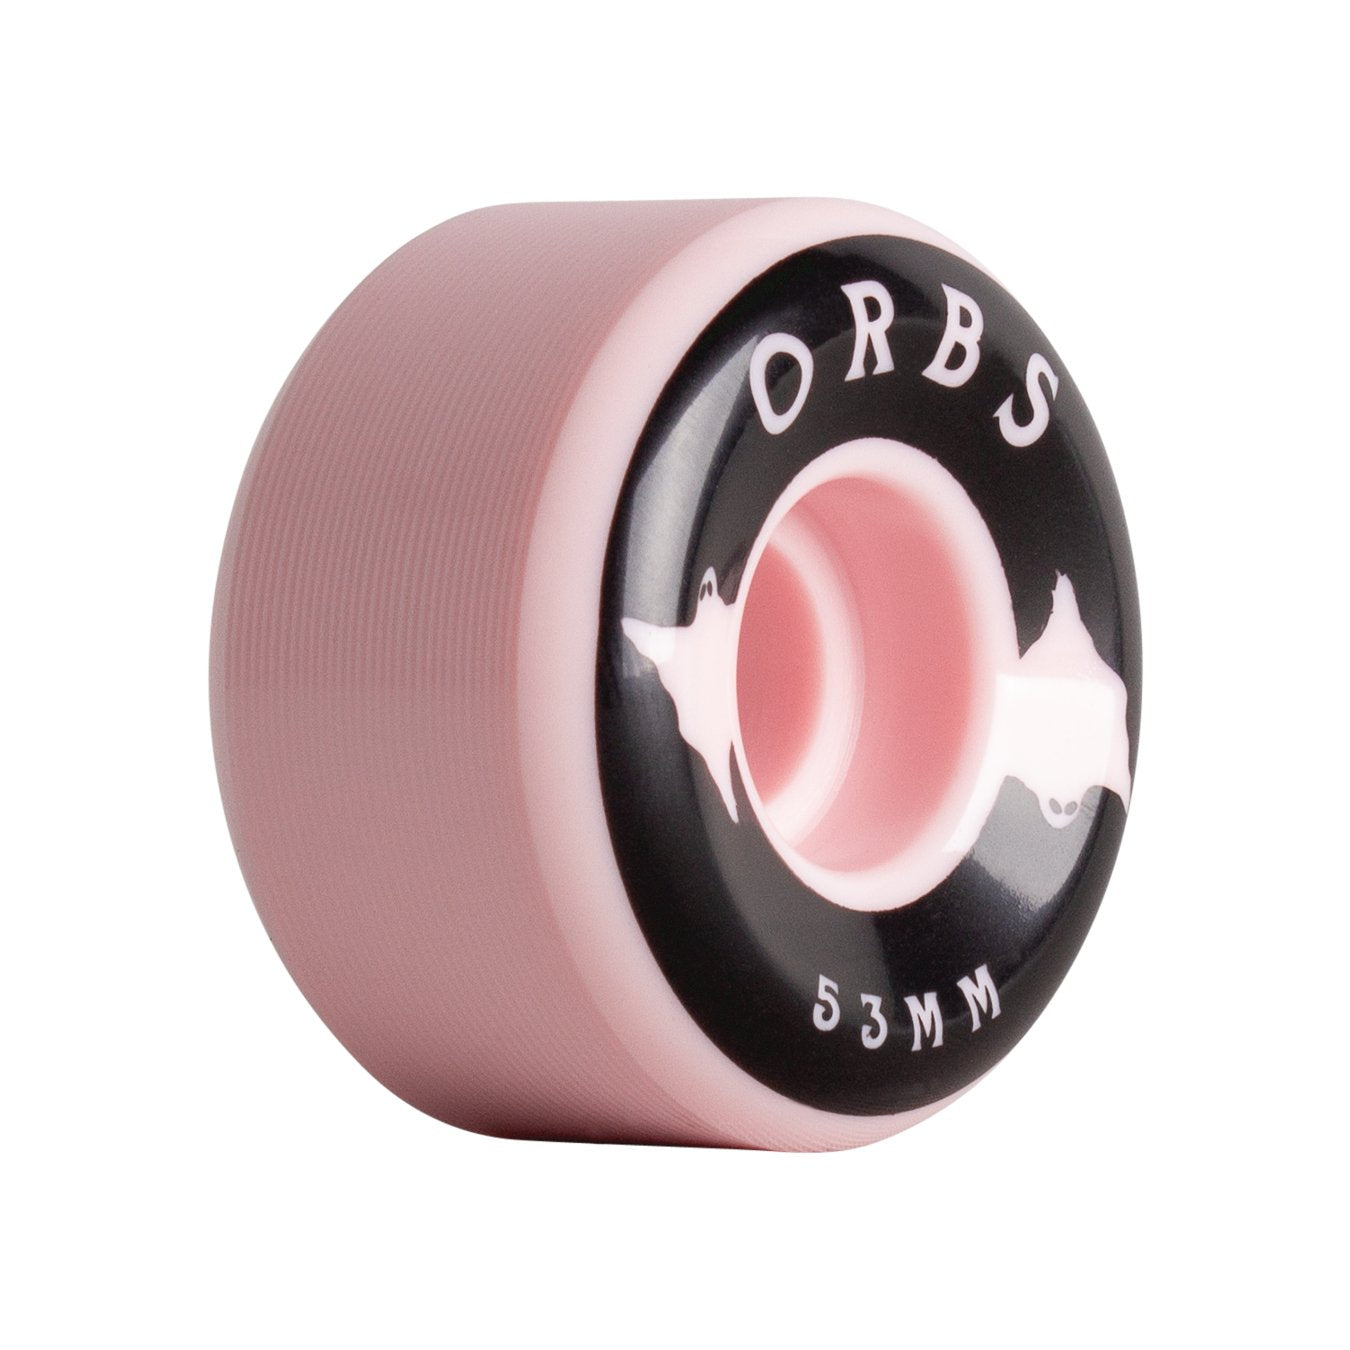 ORBS Specters Solids Wheels 53mm - Light Pink